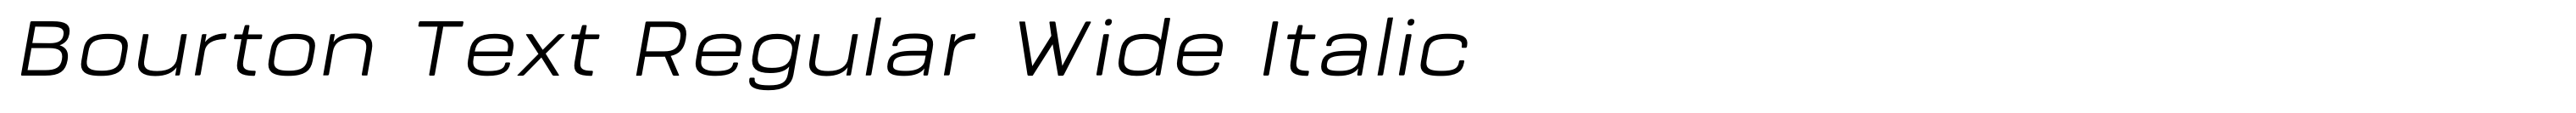 Bourton Text Regular Wide Italic